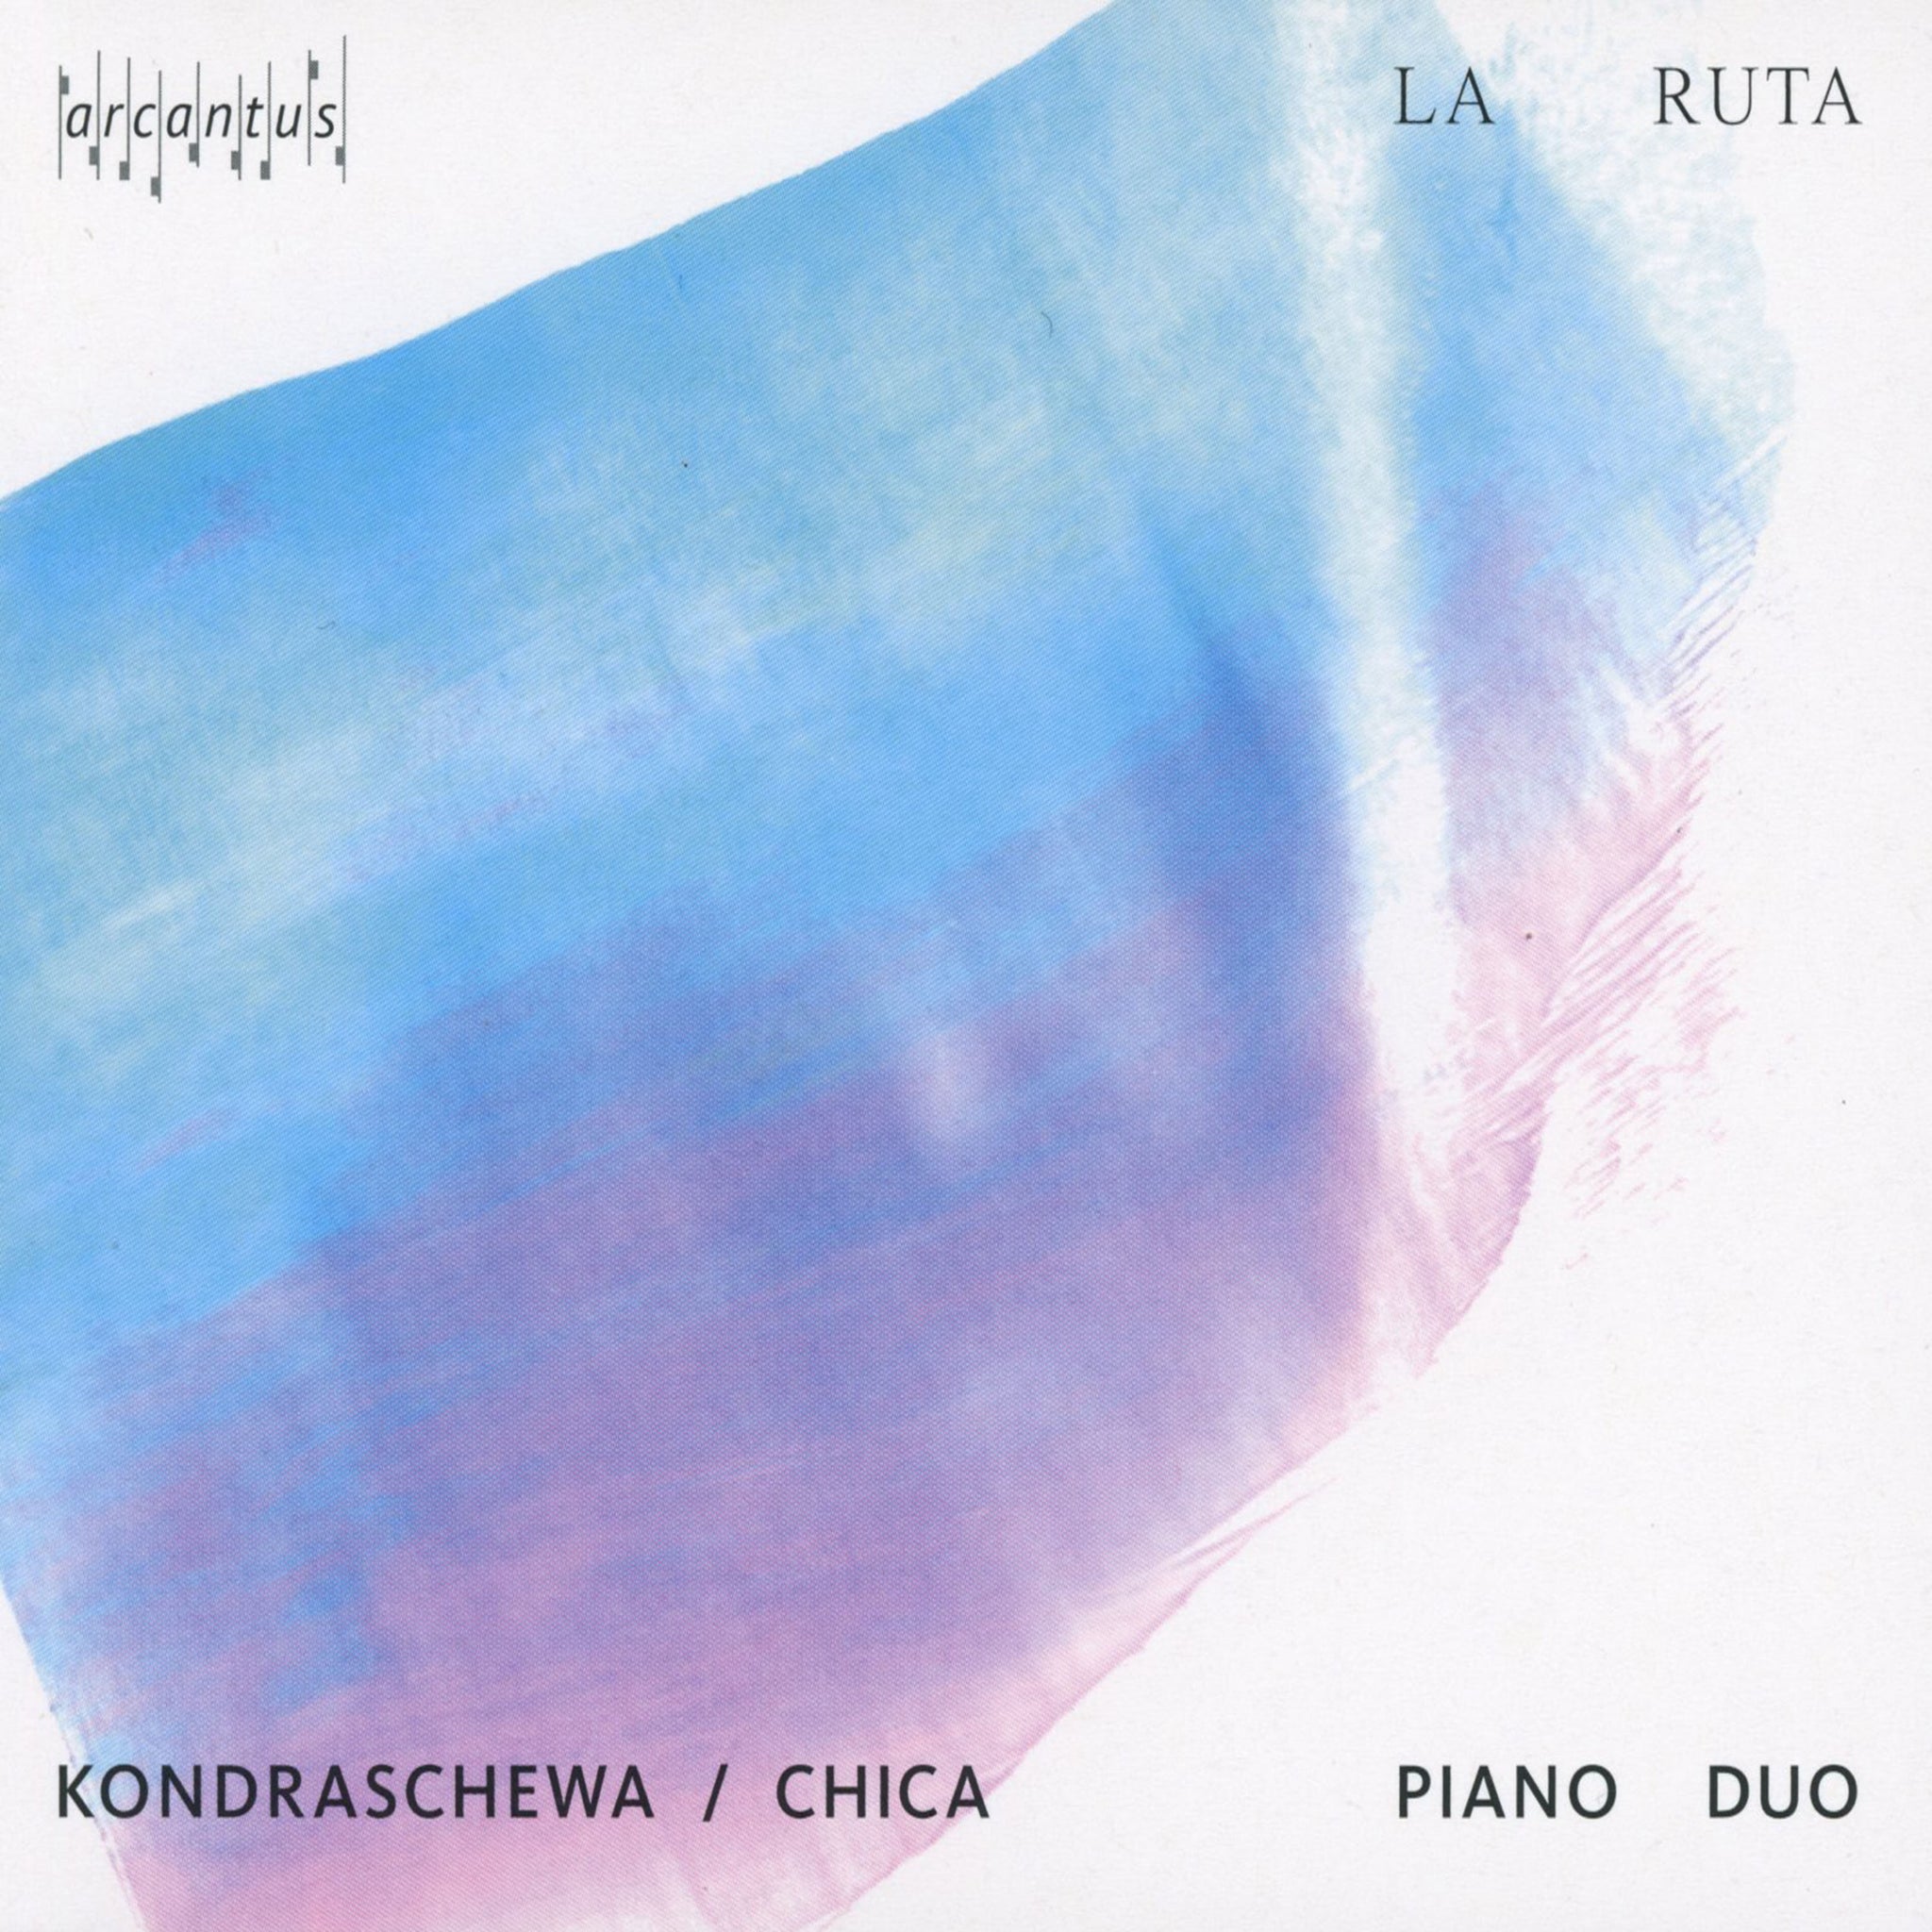 Correa, Ospina, Palau & Vega: La Ruta / Kondraschewa/Chica Piano Duo